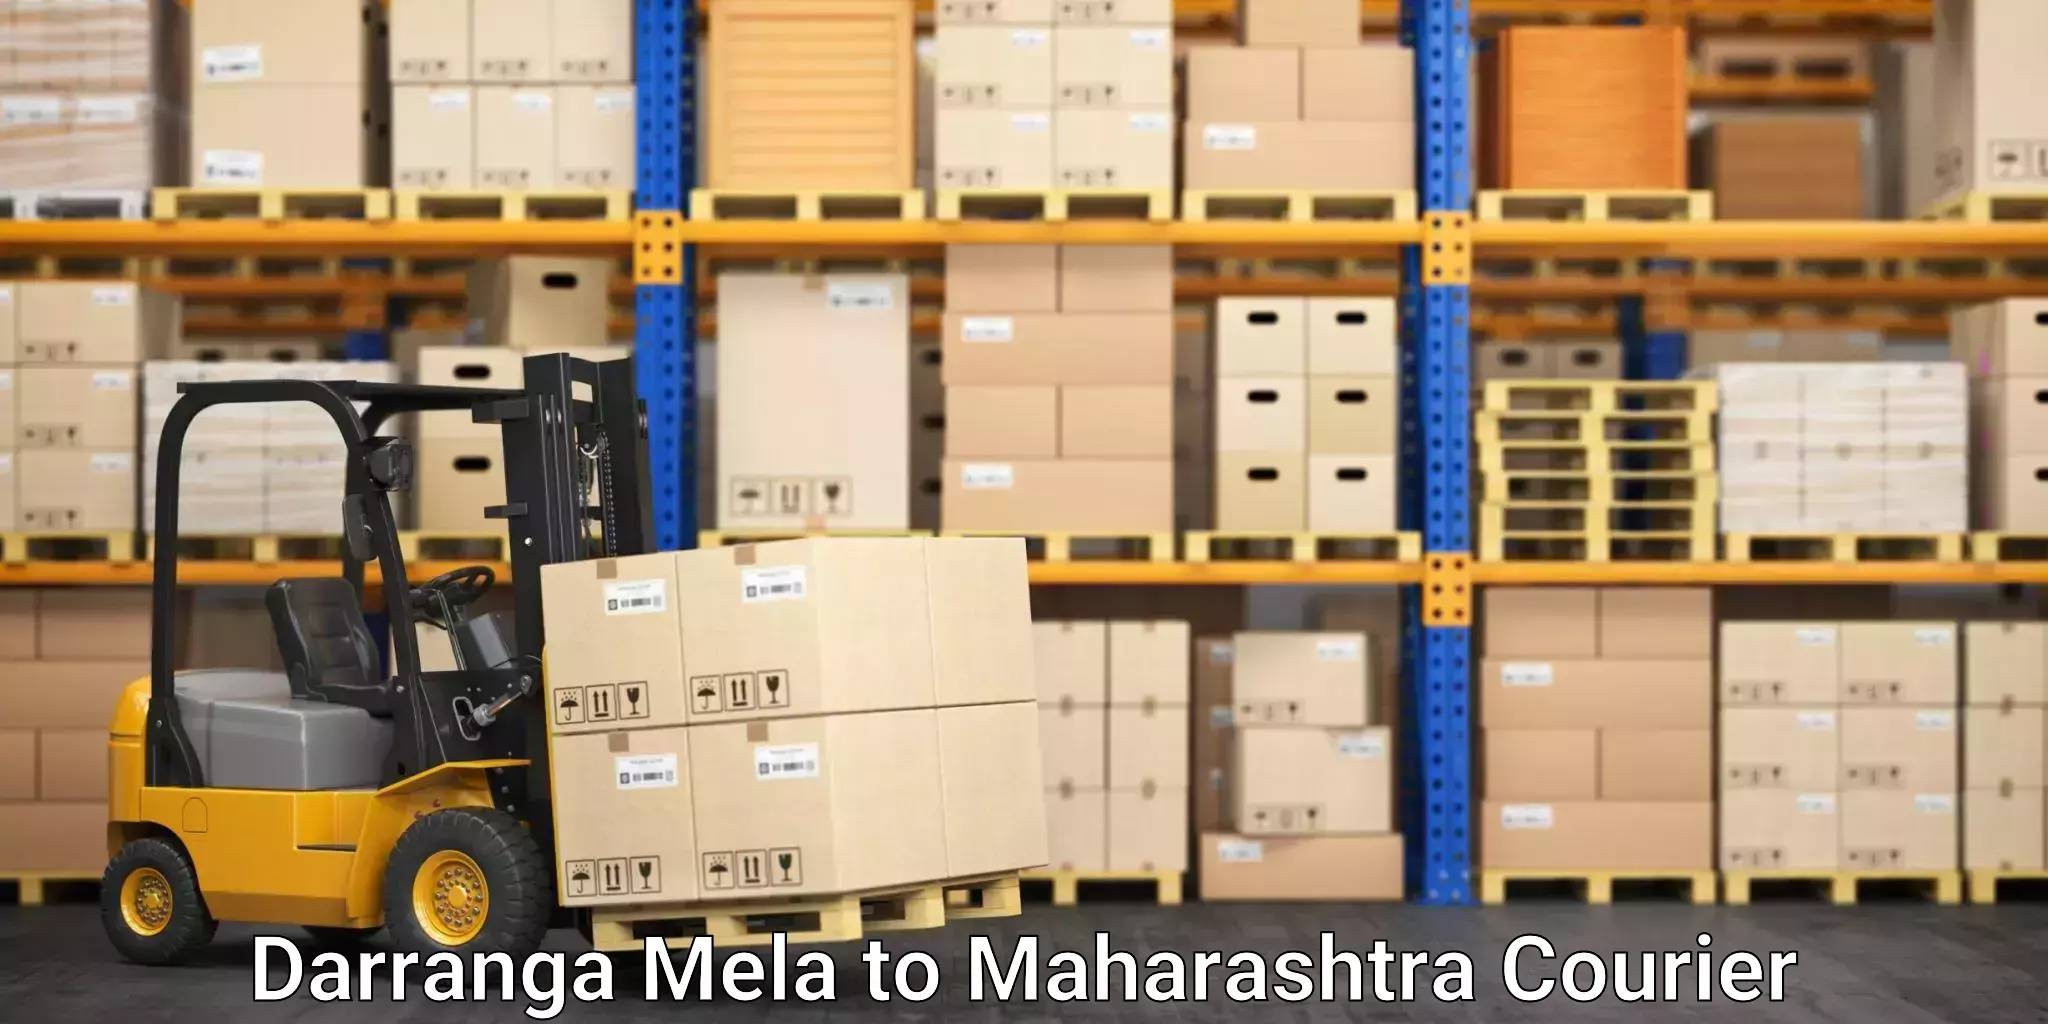 Bulk shipment in Darranga Mela to Maharashtra